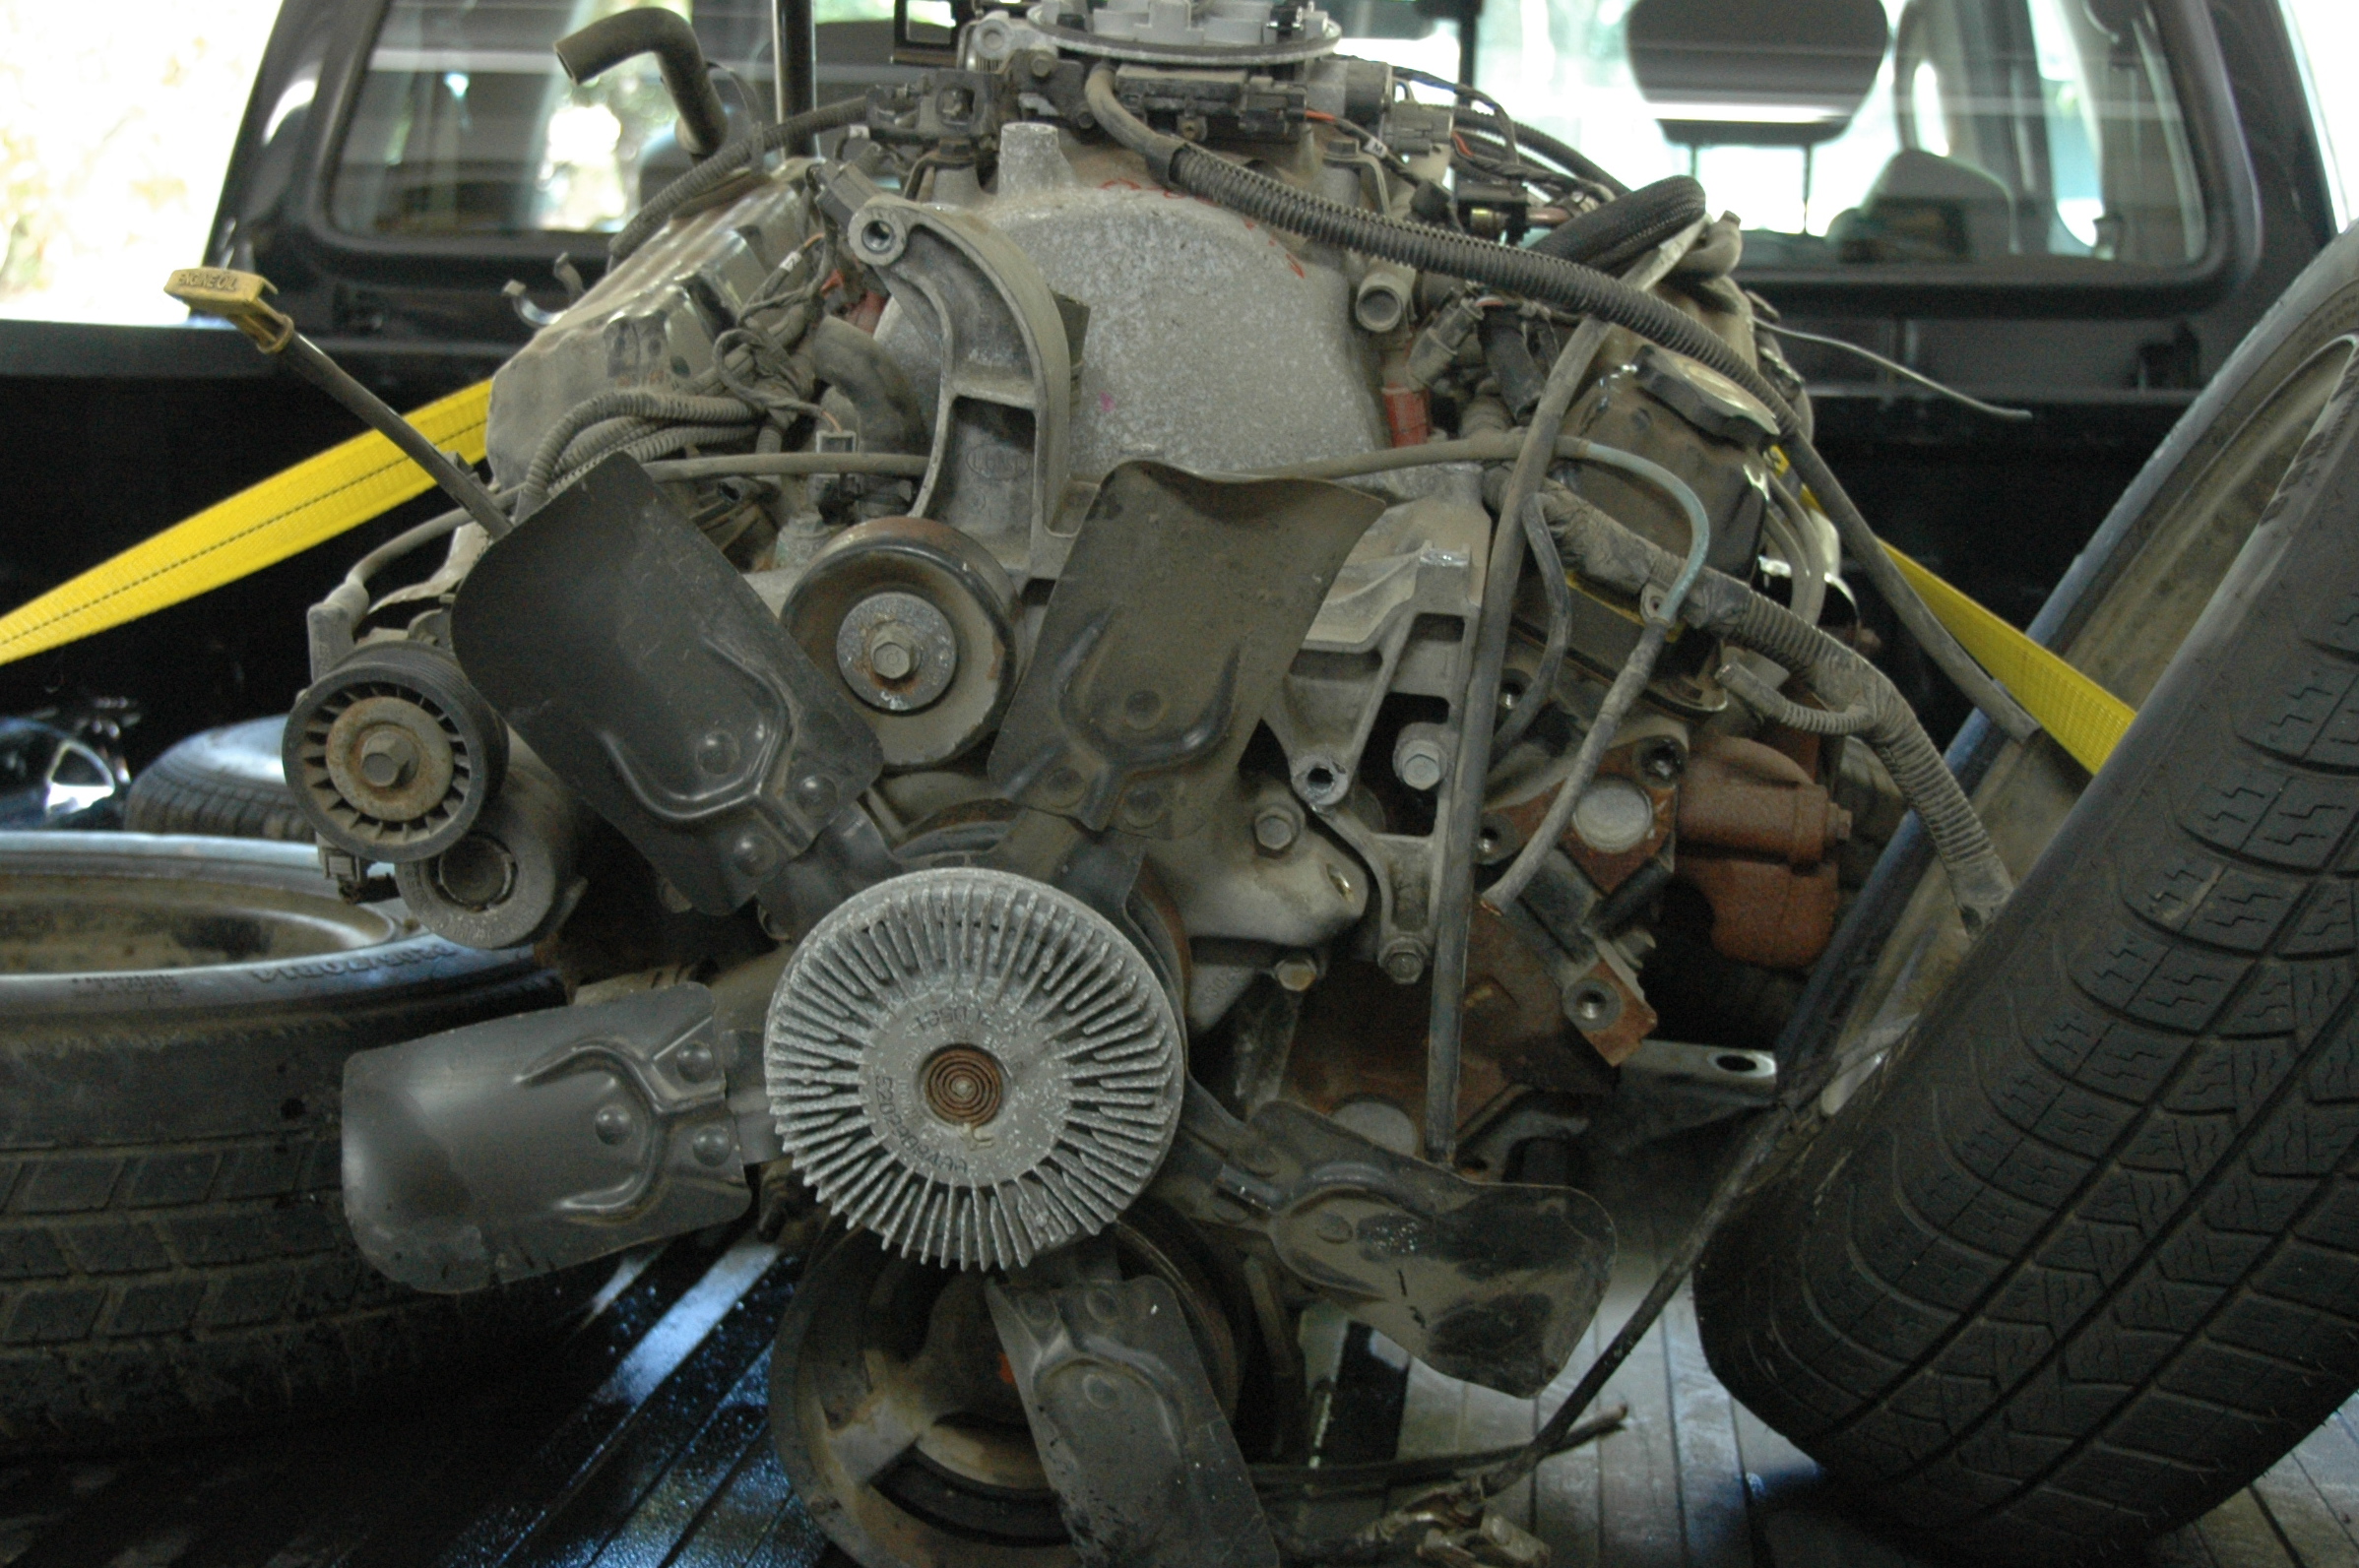 dodge magnum 5.9 engine for sale junkyard magnum engine swap candidate